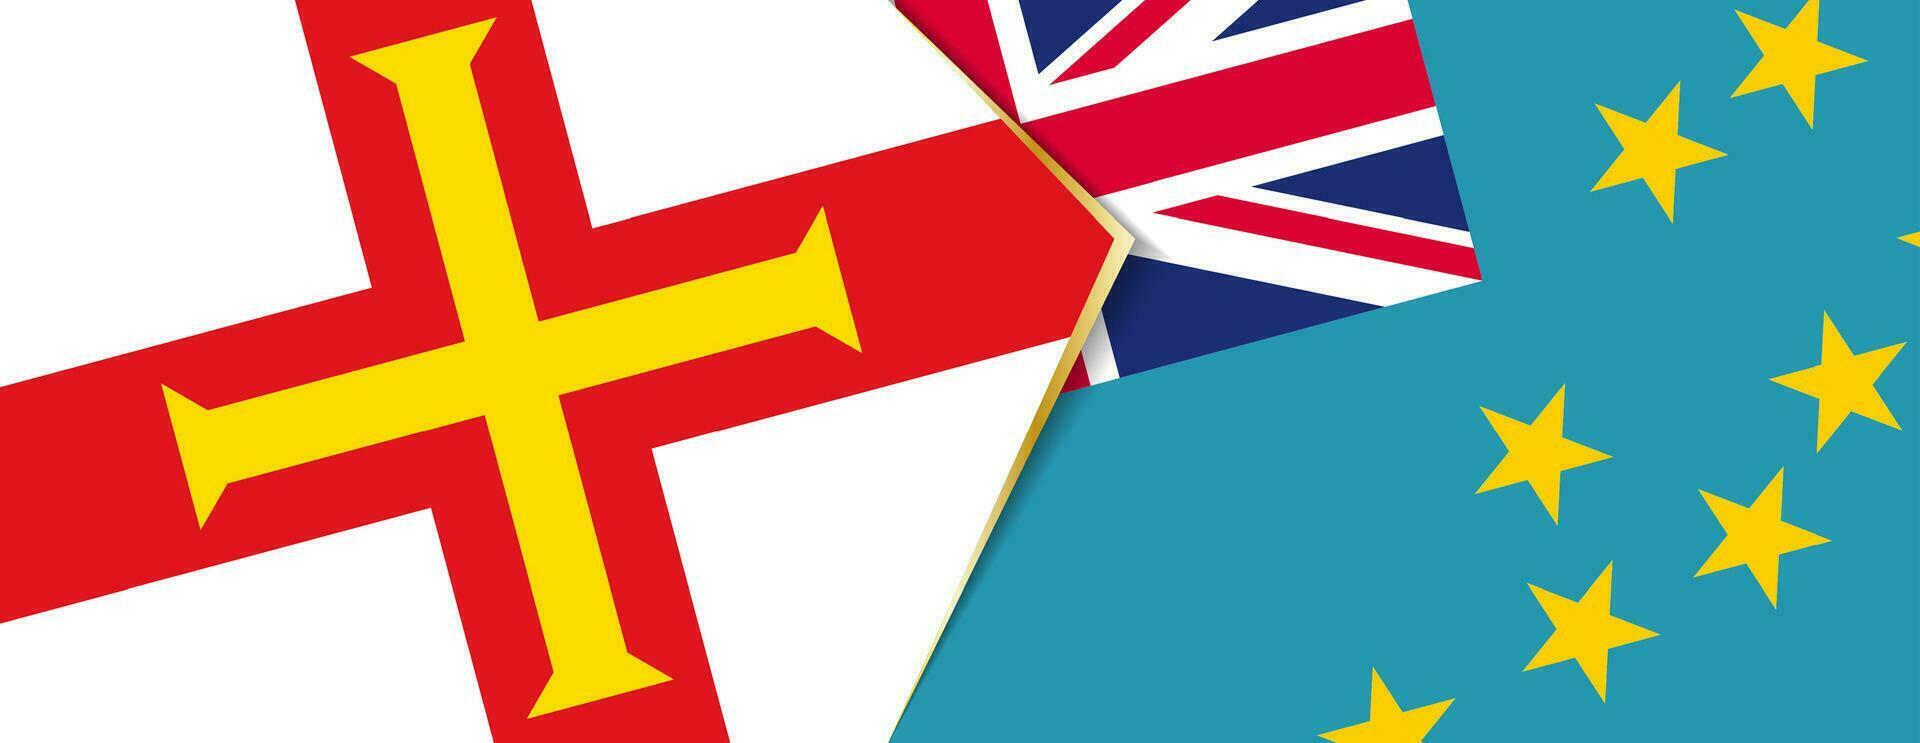 Guernsey en Tuvalu vlaggen, twee vector vlaggen.